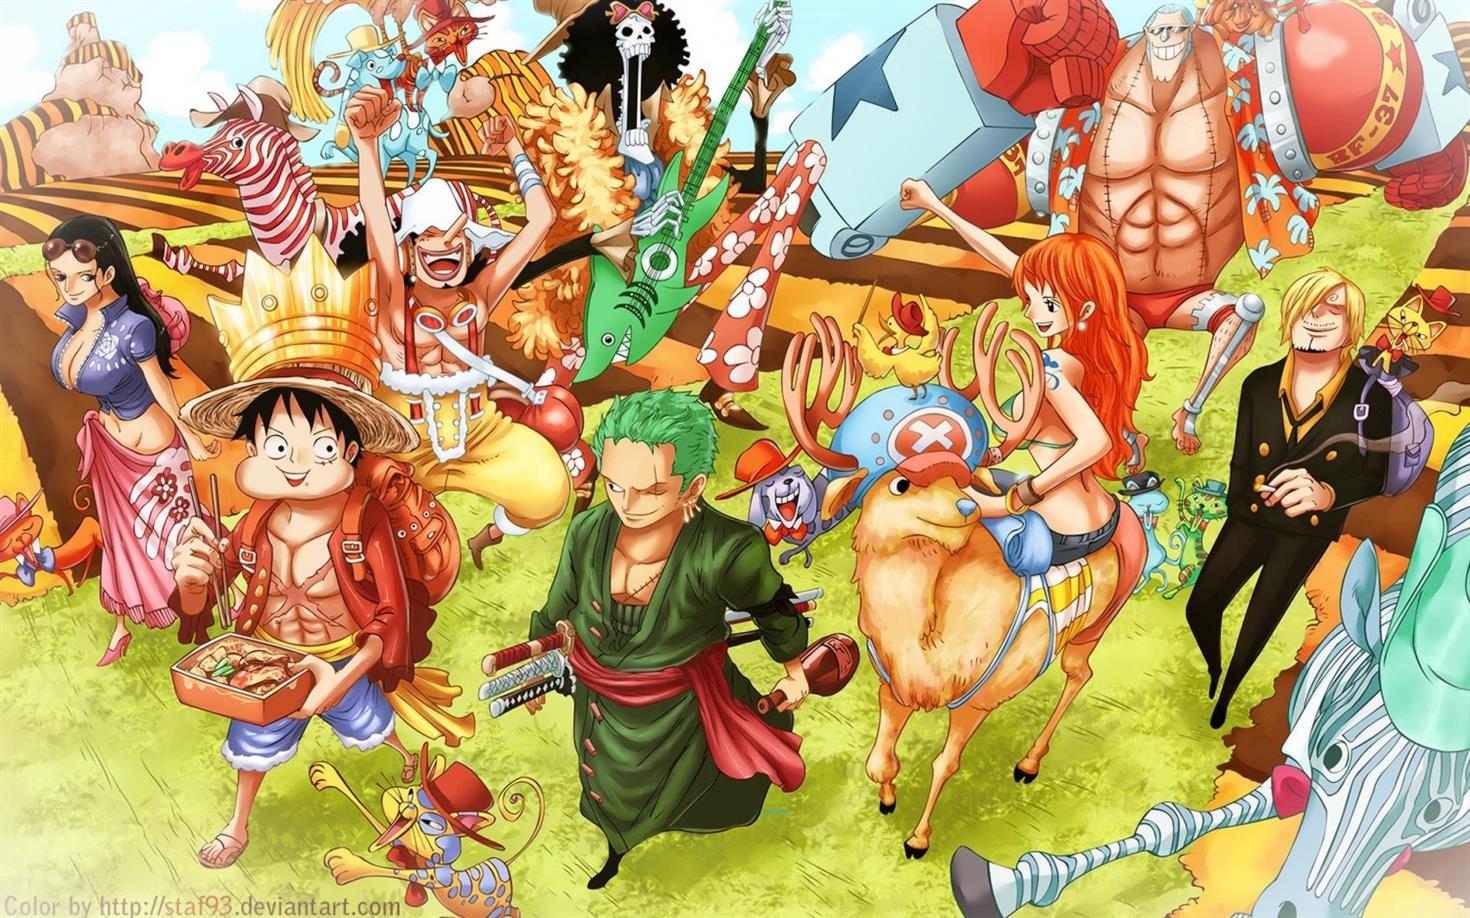 Date de sortie du chapitre 1018 de One Piece spoilers ivyS4Xs 1